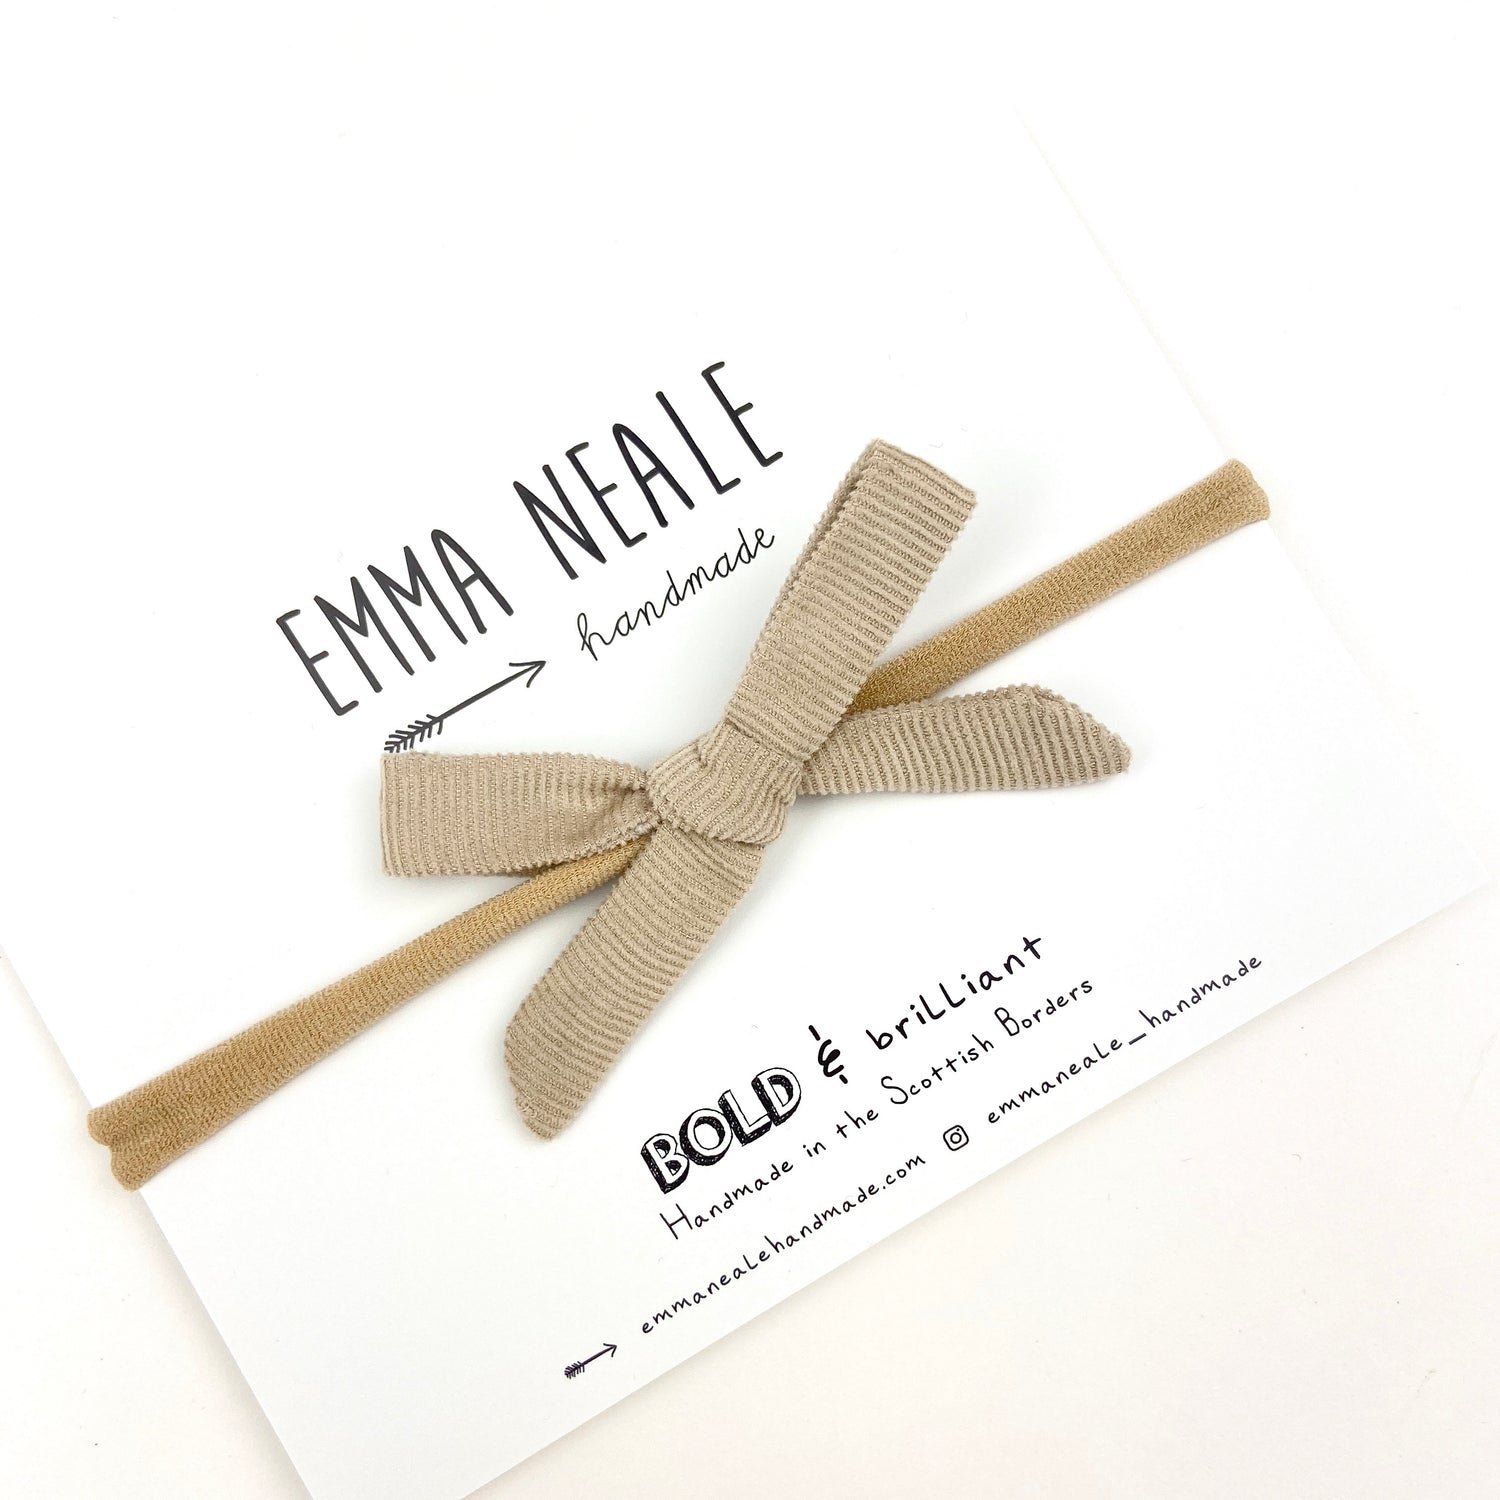 Fudge Velvet Cord Orla Bow Headband - Emma Neale Handmade